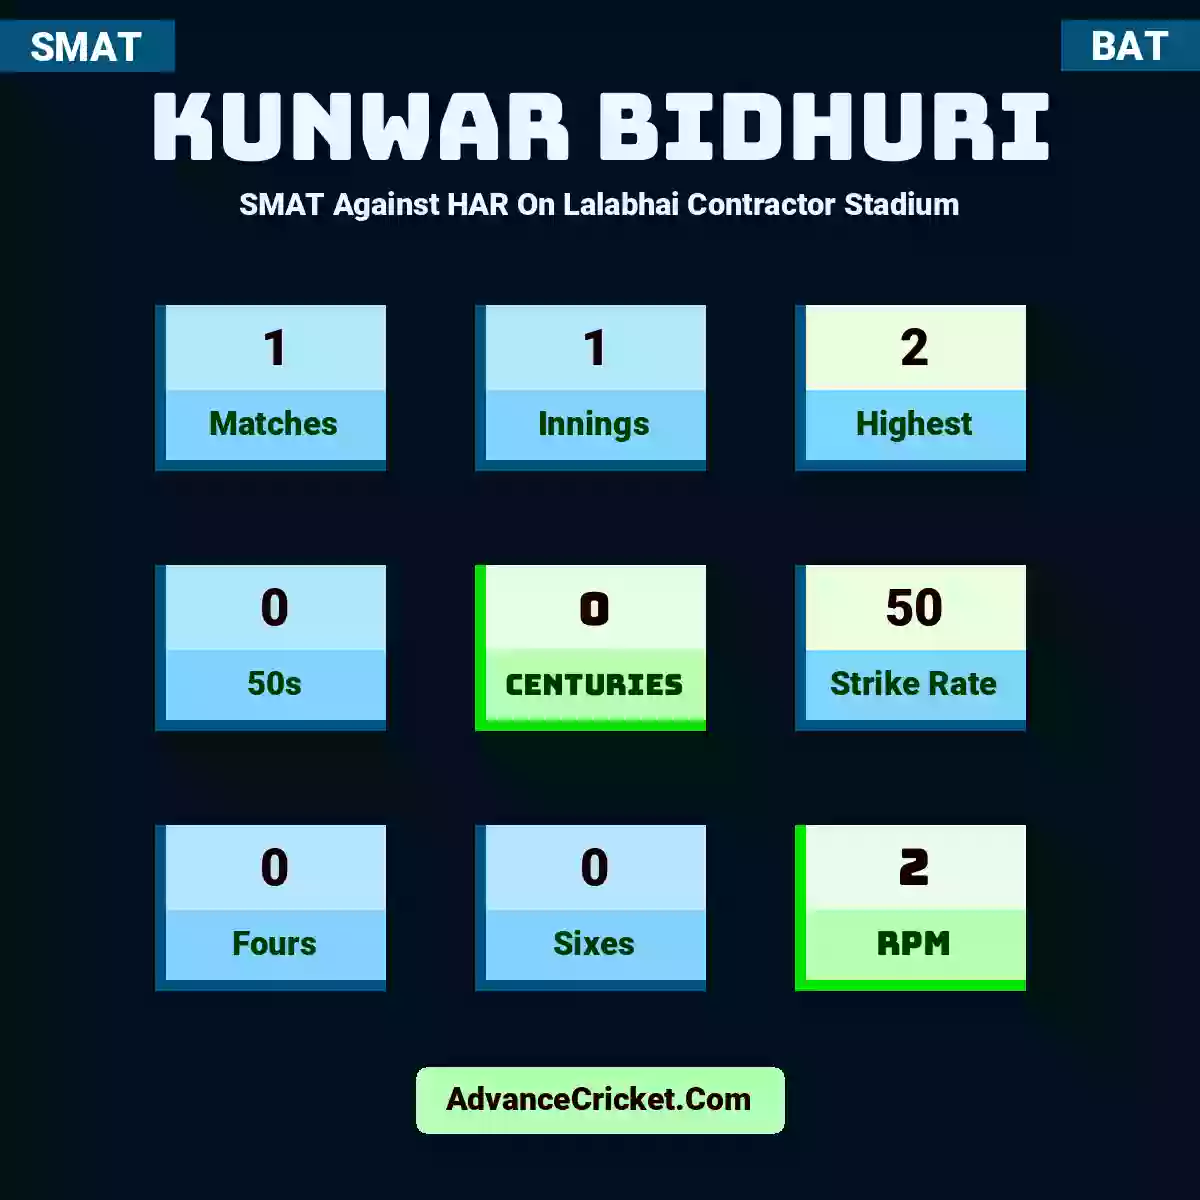 Kunwar Bidhuri SMAT  Against HAR On Lalabhai Contractor Stadium, Kunwar Bidhuri played 1 matches, scored 2 runs as highest, 0 half-centuries, and 0 centuries, with a strike rate of 50. K.Bidhuri hit 0 fours and 0 sixes, with an RPM of 2.